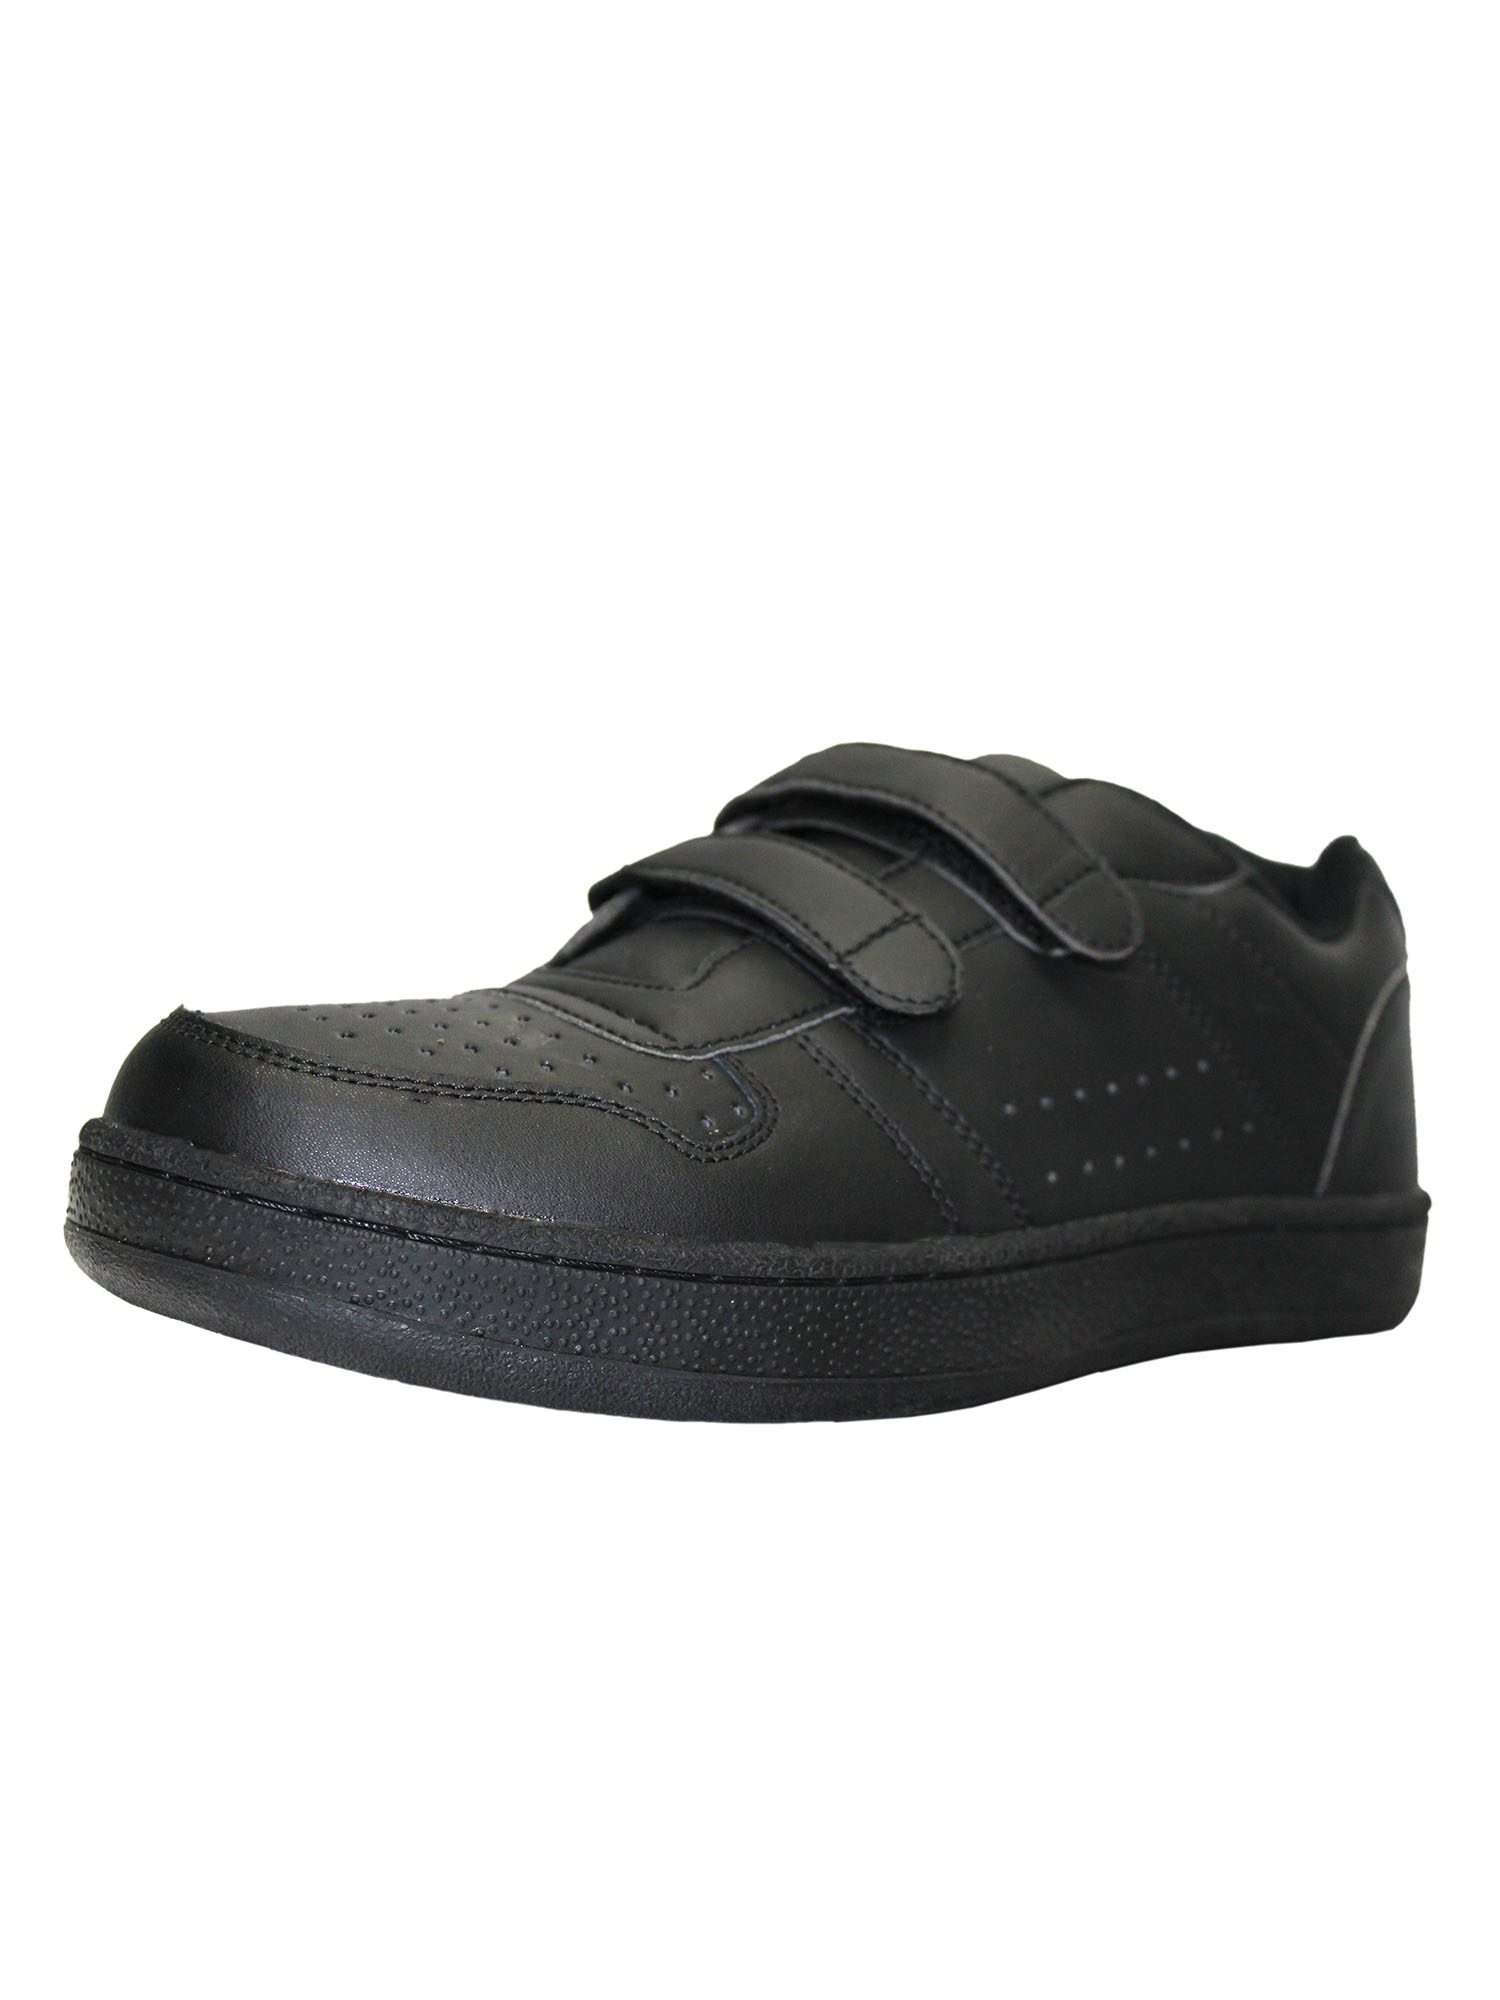 Tanleewa Men's Leather Strap Sneakers Lightweight Hook and Loop Walking Shoe Size 12 Adult Male - image 1 of 4